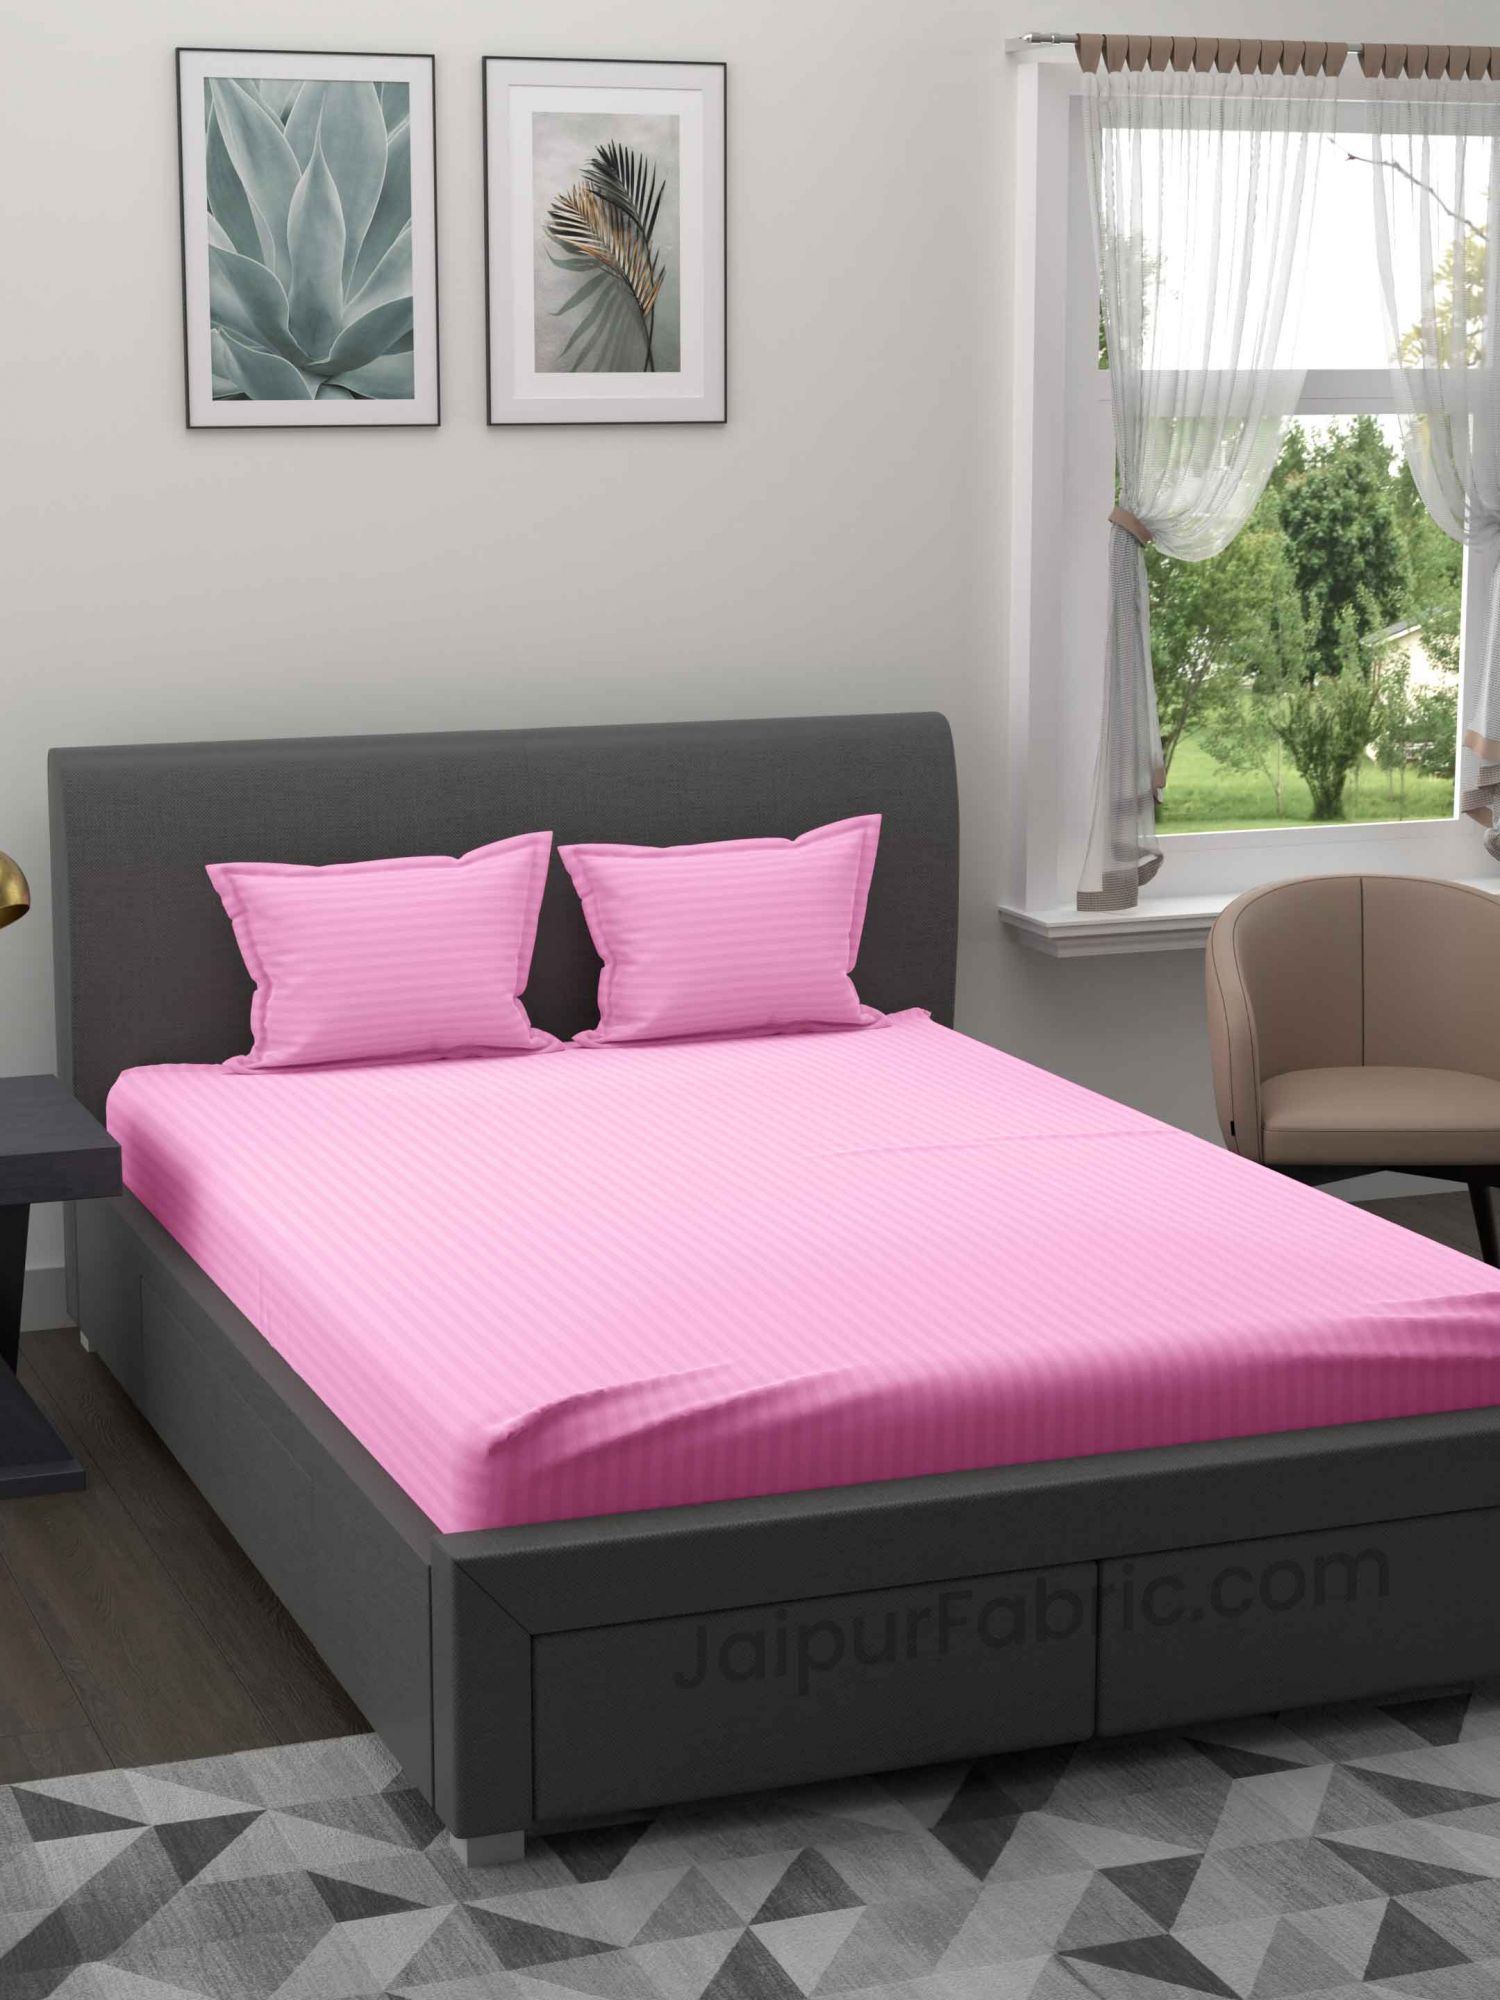 Light Pink Satin Stripes Double BedSheet